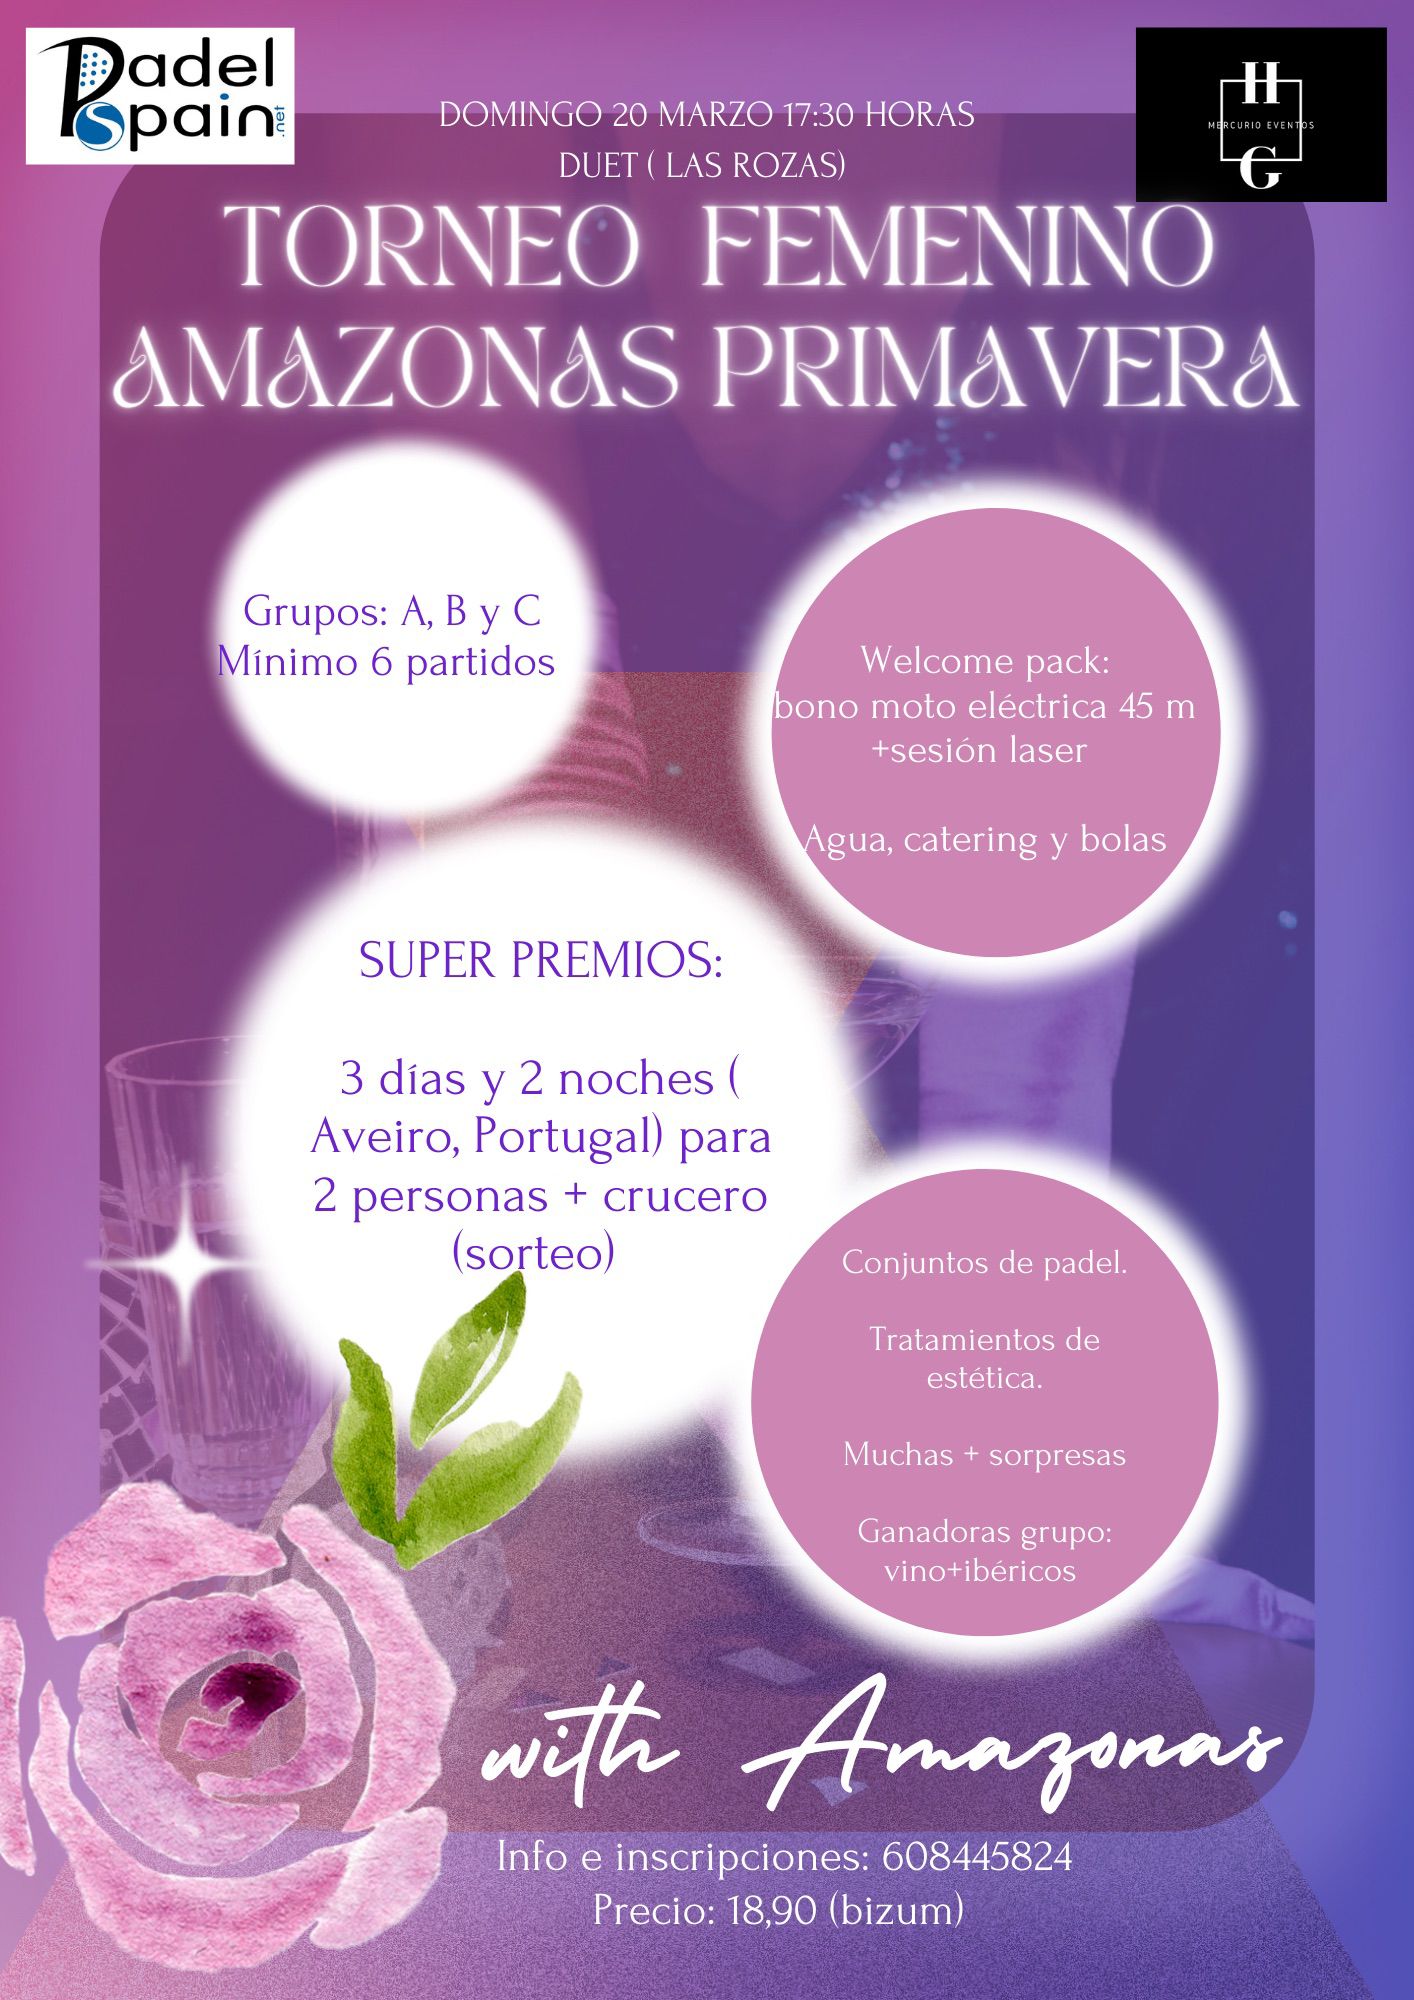 Torneo femenino amazonas DUet Sport Primavera